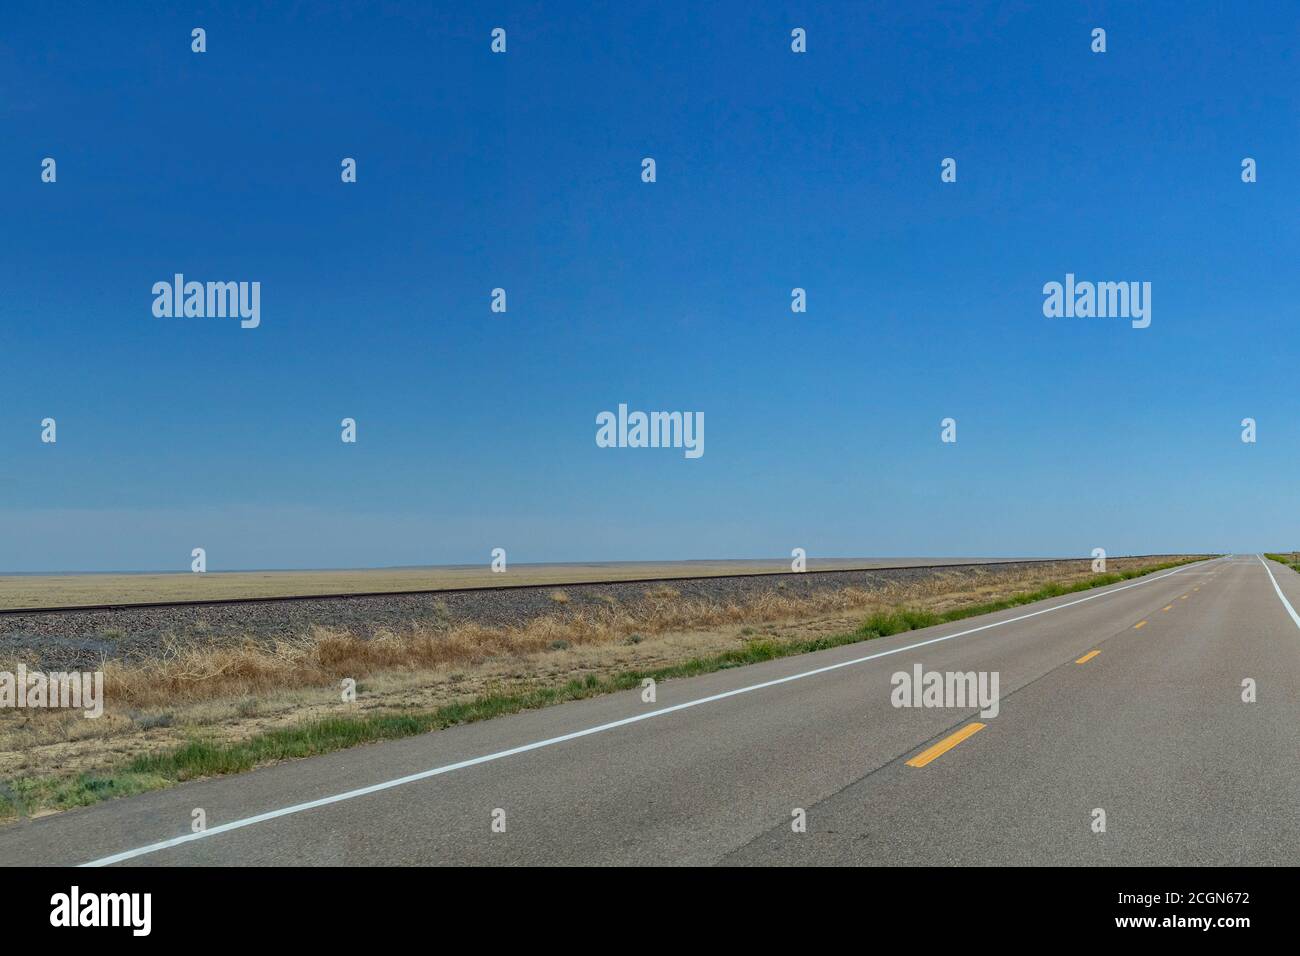 Strada autostradale aperta con binari ferroviari paralleli, Kansas, USA Foto Stock